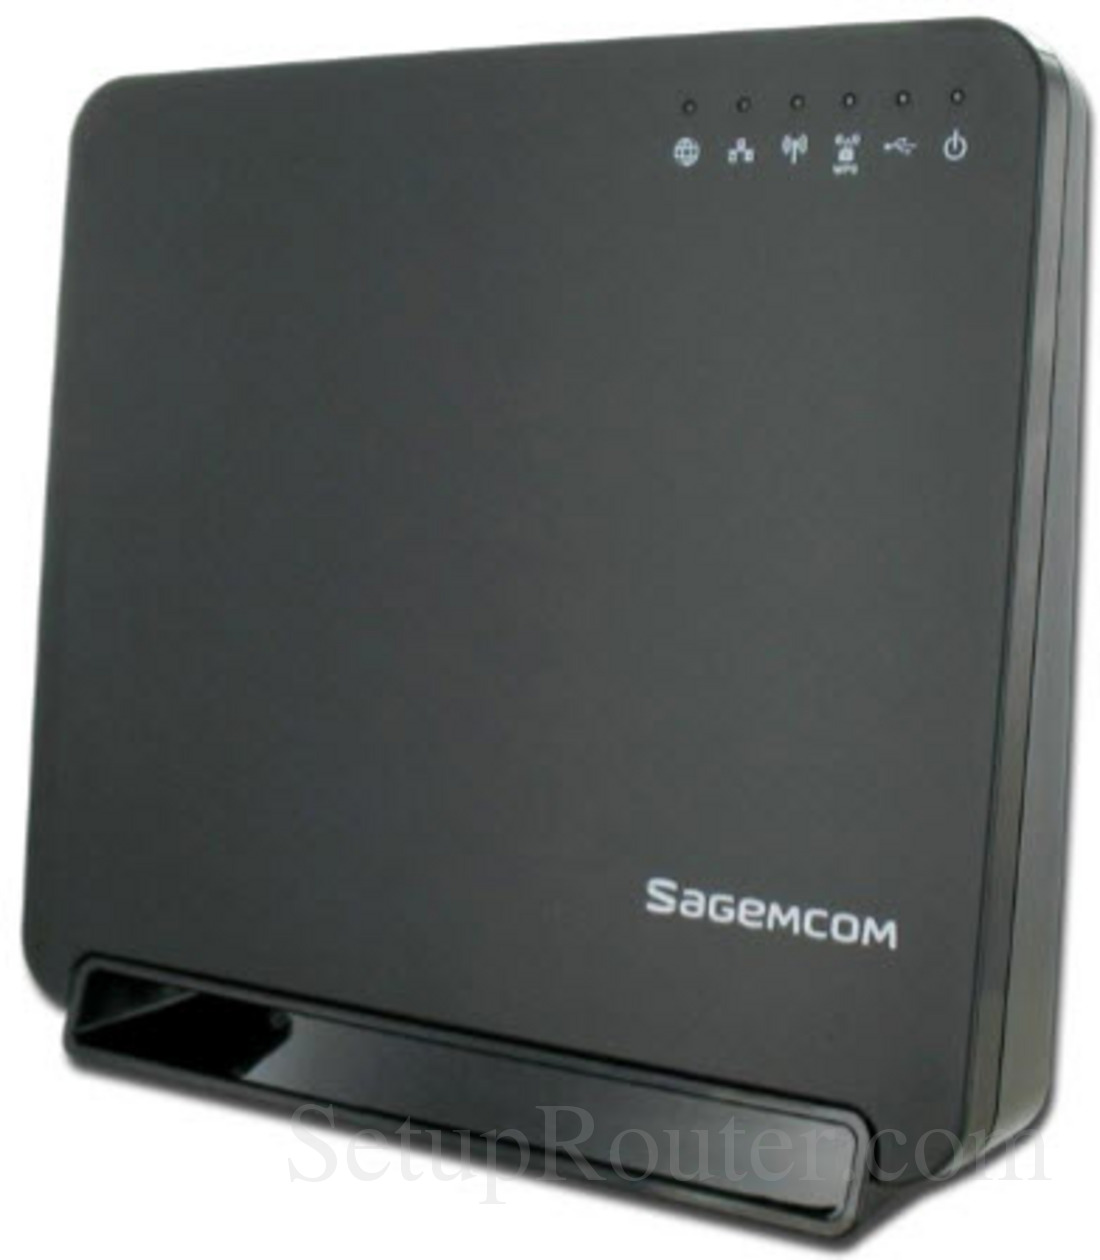 sagemcom fast 5260 firmware download